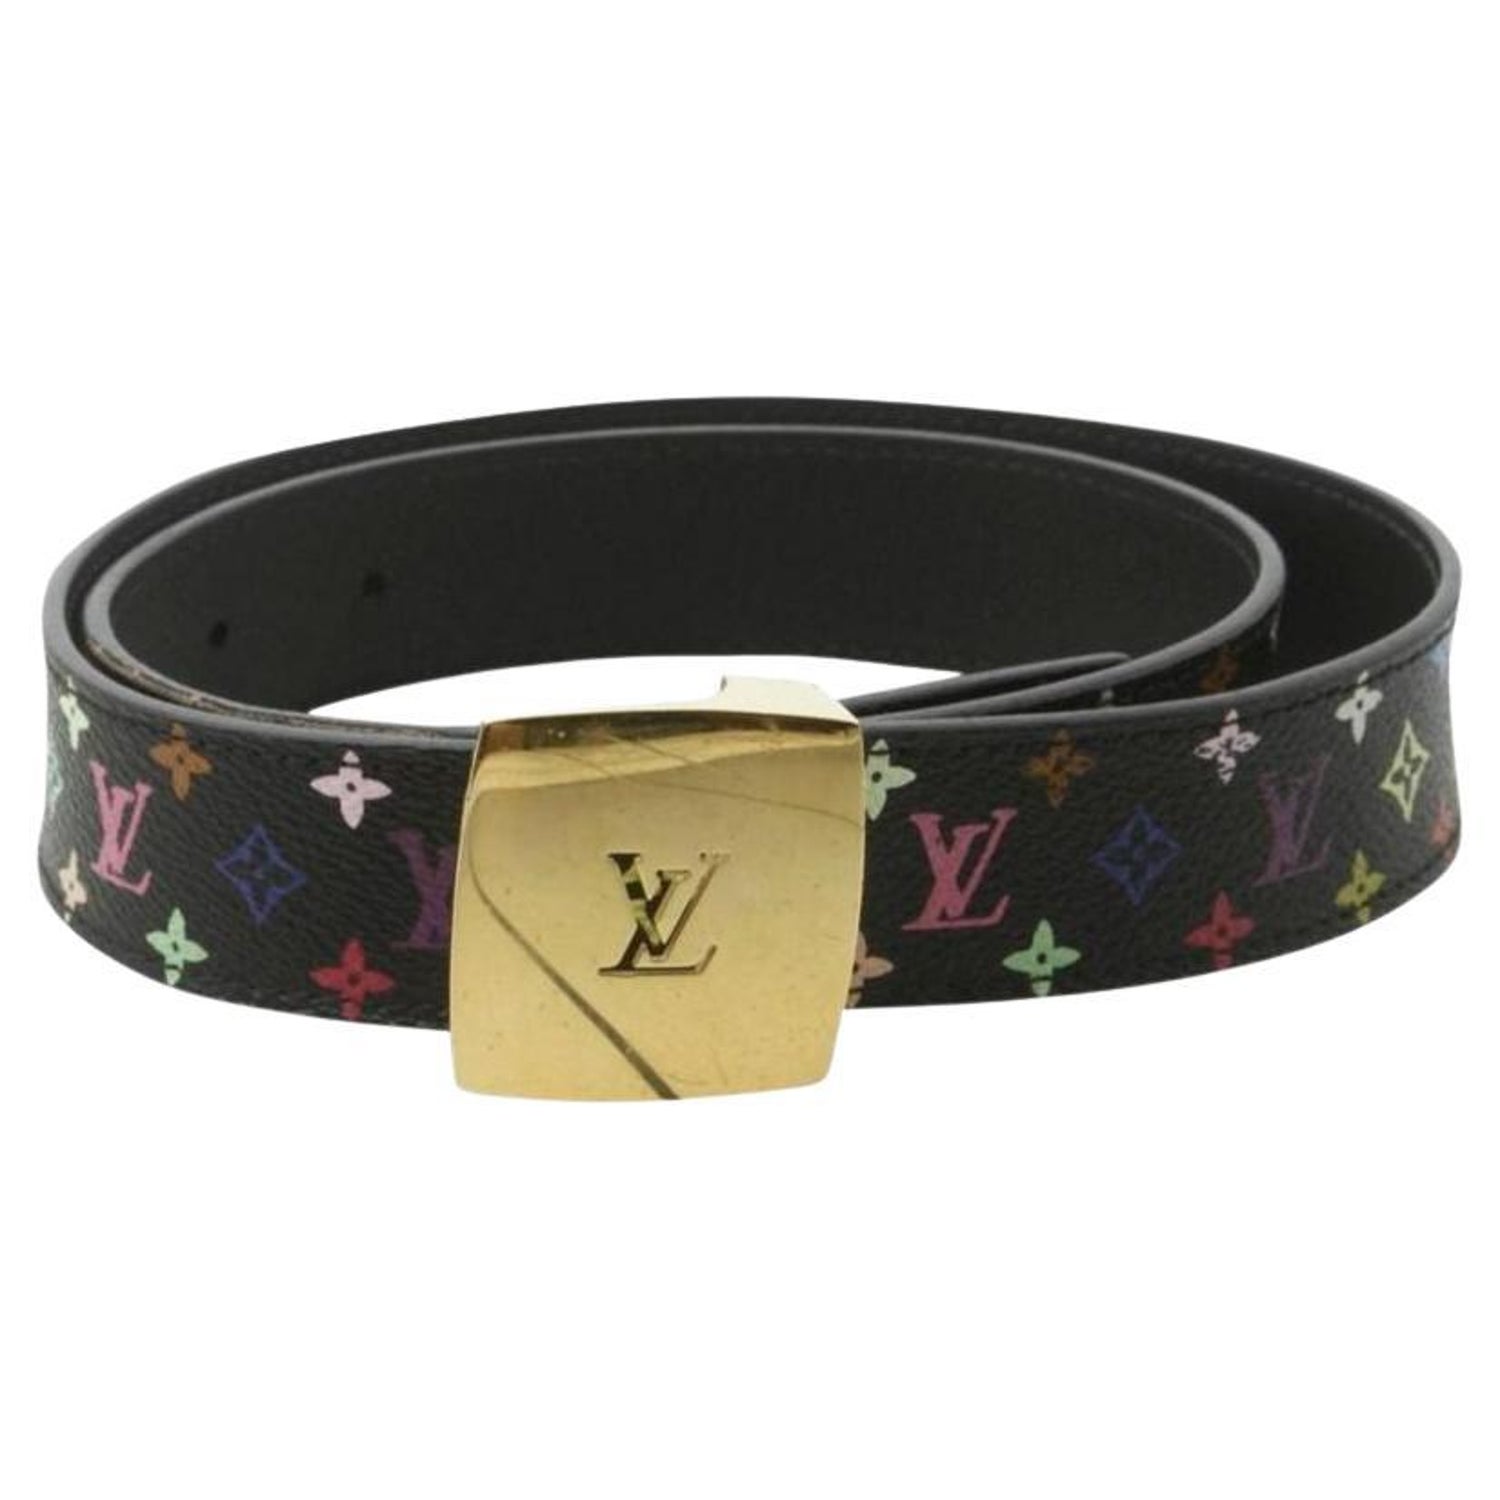 Louis Vuitton Dauphine Pearl 20mm Reversible Belt Black Beige Leather. Size 80 cm